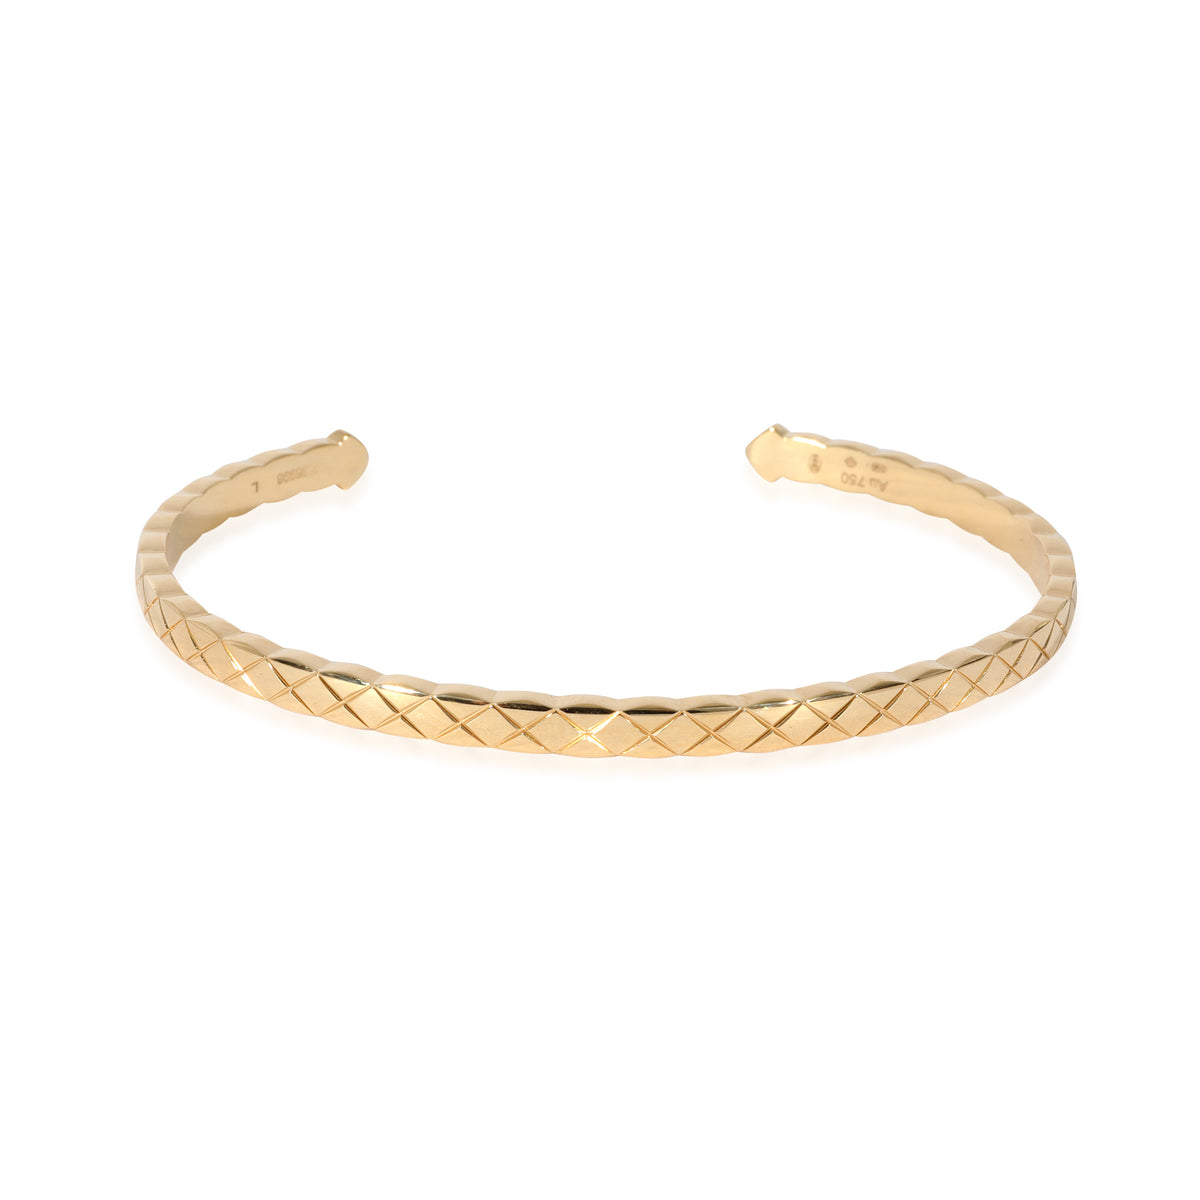 Chanel Coco Crush Open Cuff Bracelet in 18k Yellow Gold